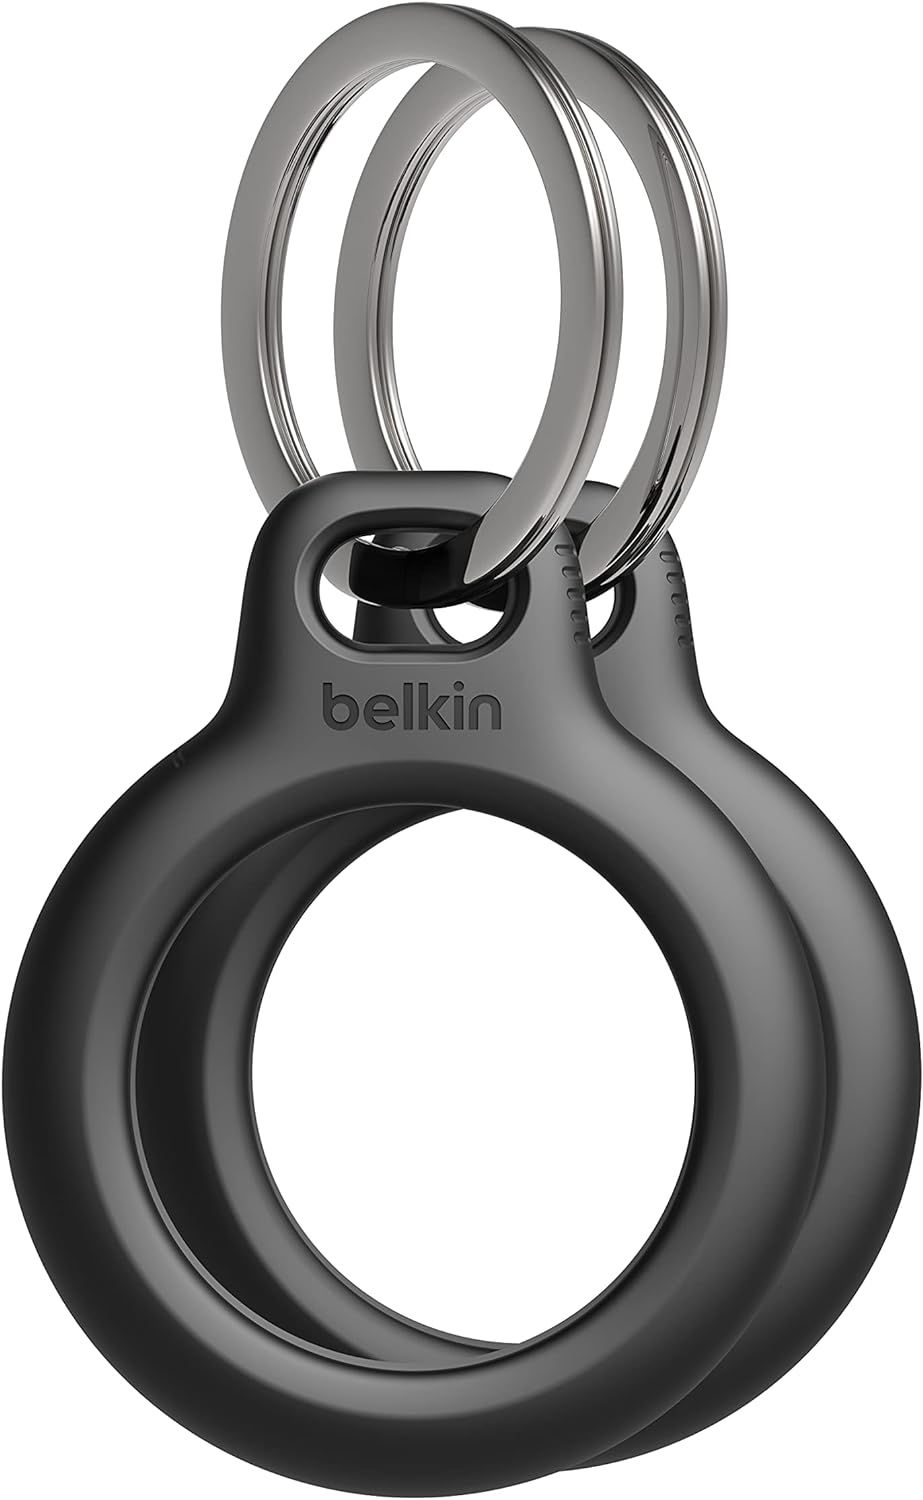 Visit the Belkin Store | Amazon (US)